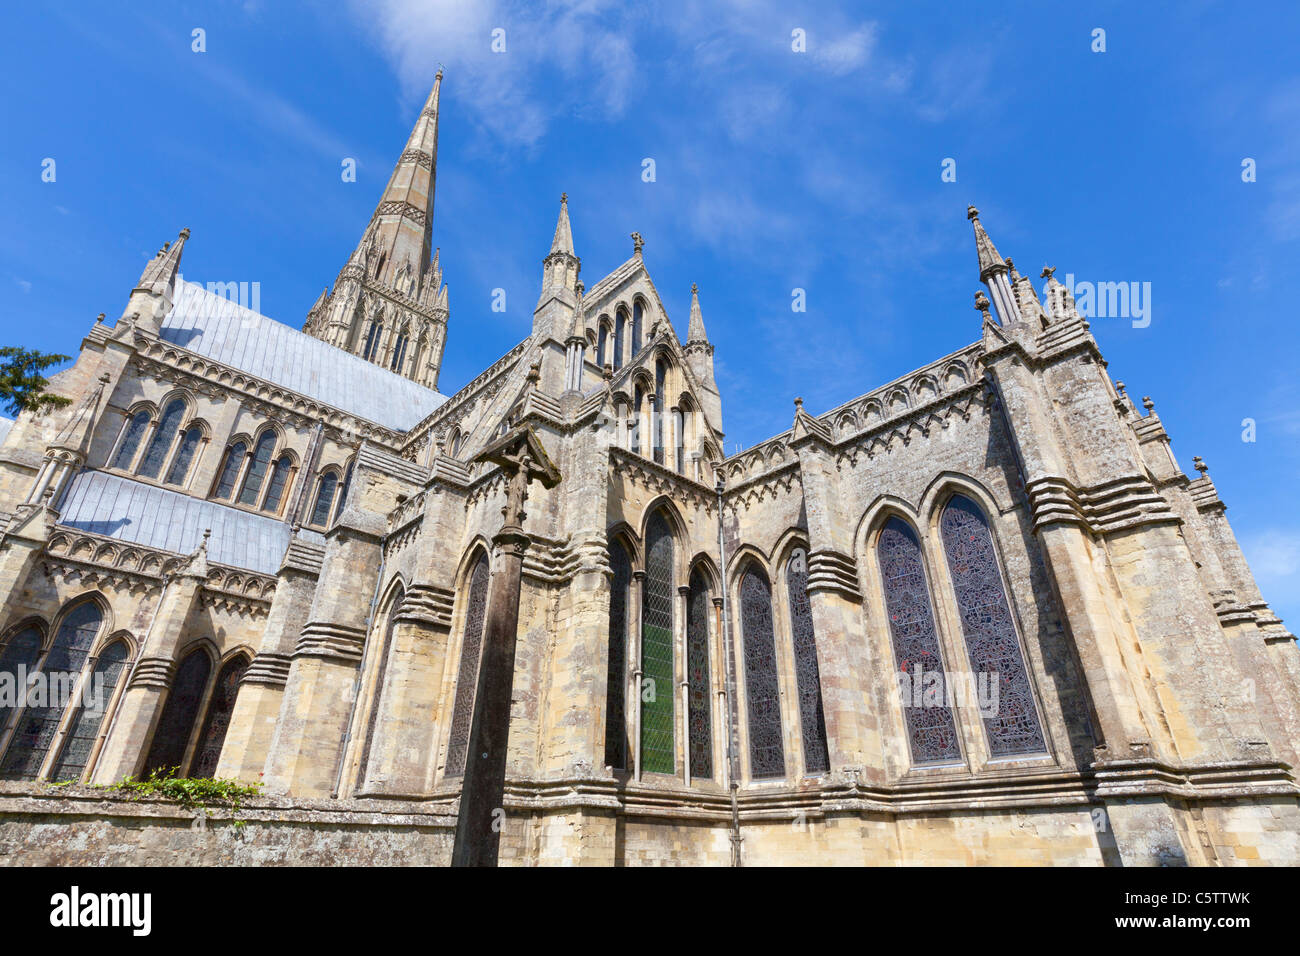 La cattedrale di Salisbury Wiltshire, Inghilterra UK GB EU Europe Foto Stock